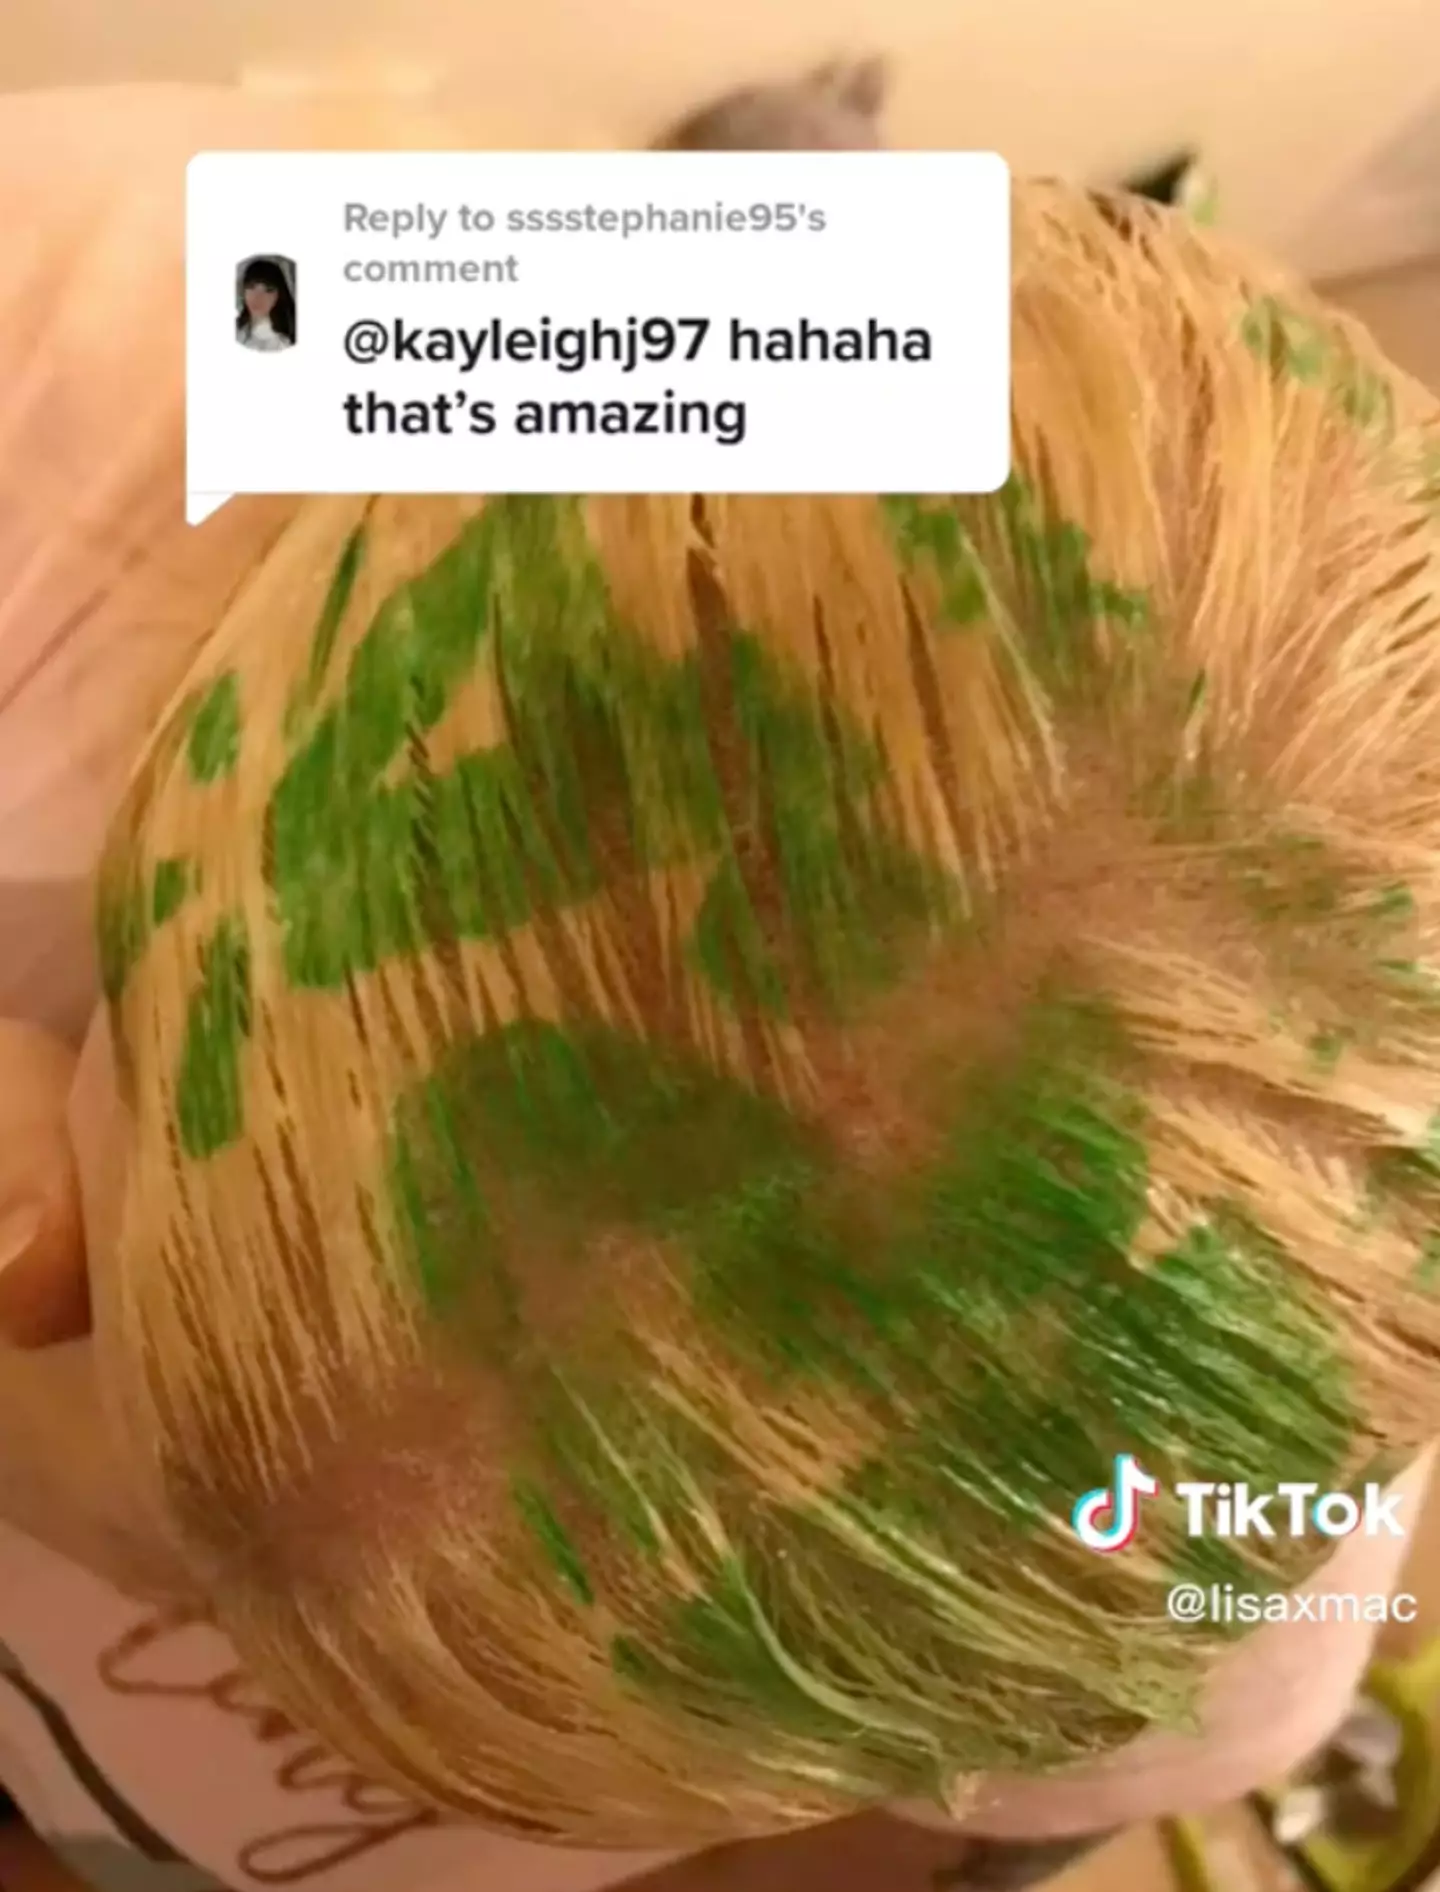 The green Asda logo printed onto her hair.